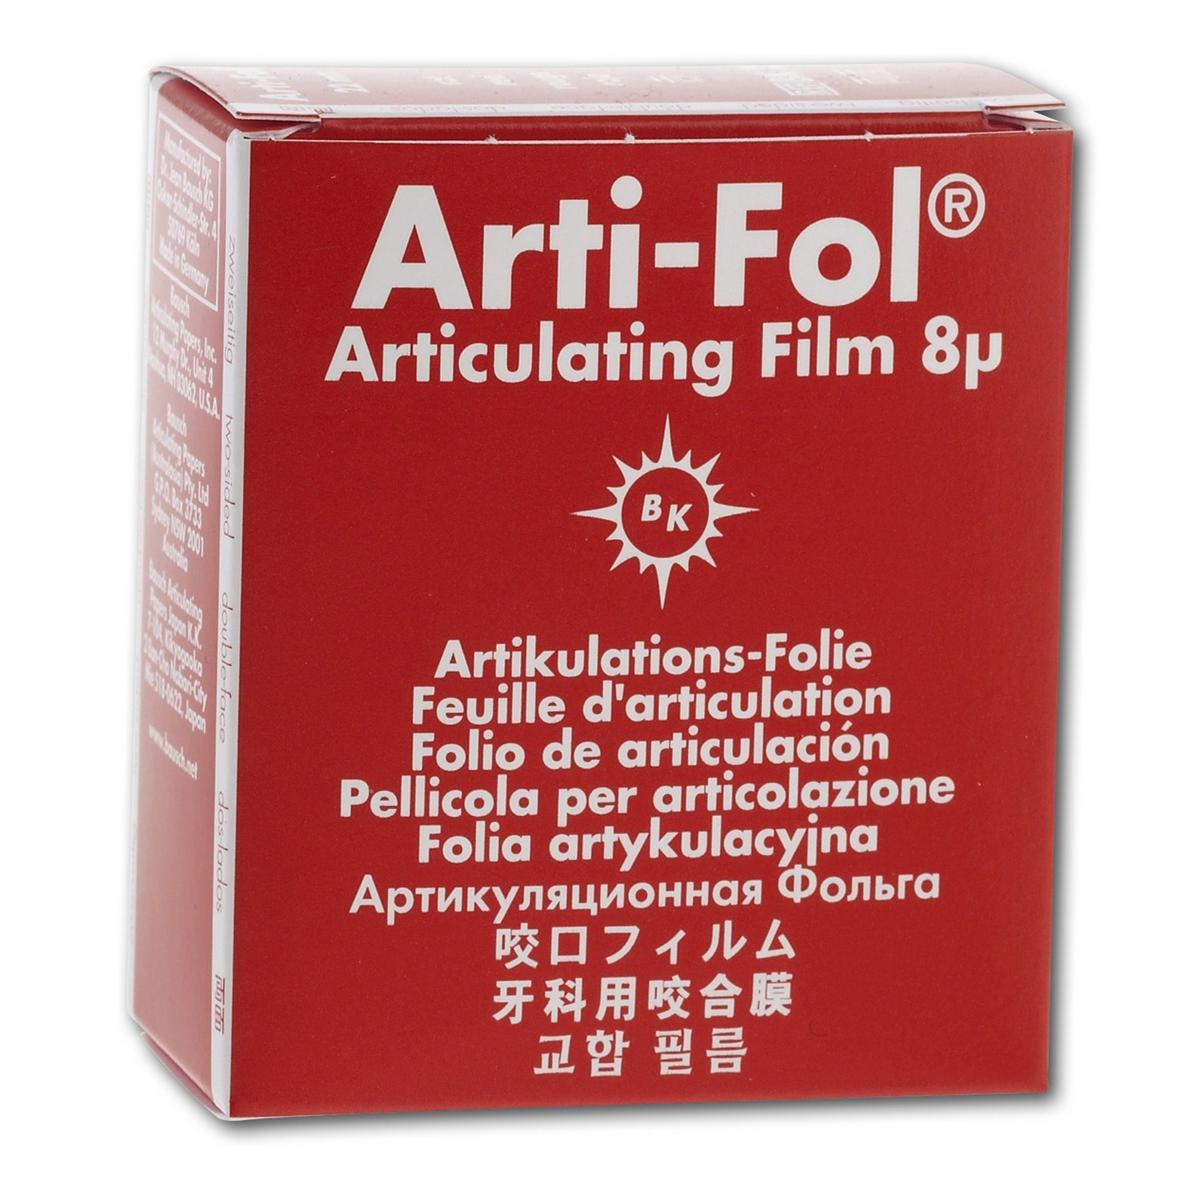 Arti-Fol dubbelzijdig, 8 micron - BK25, rood